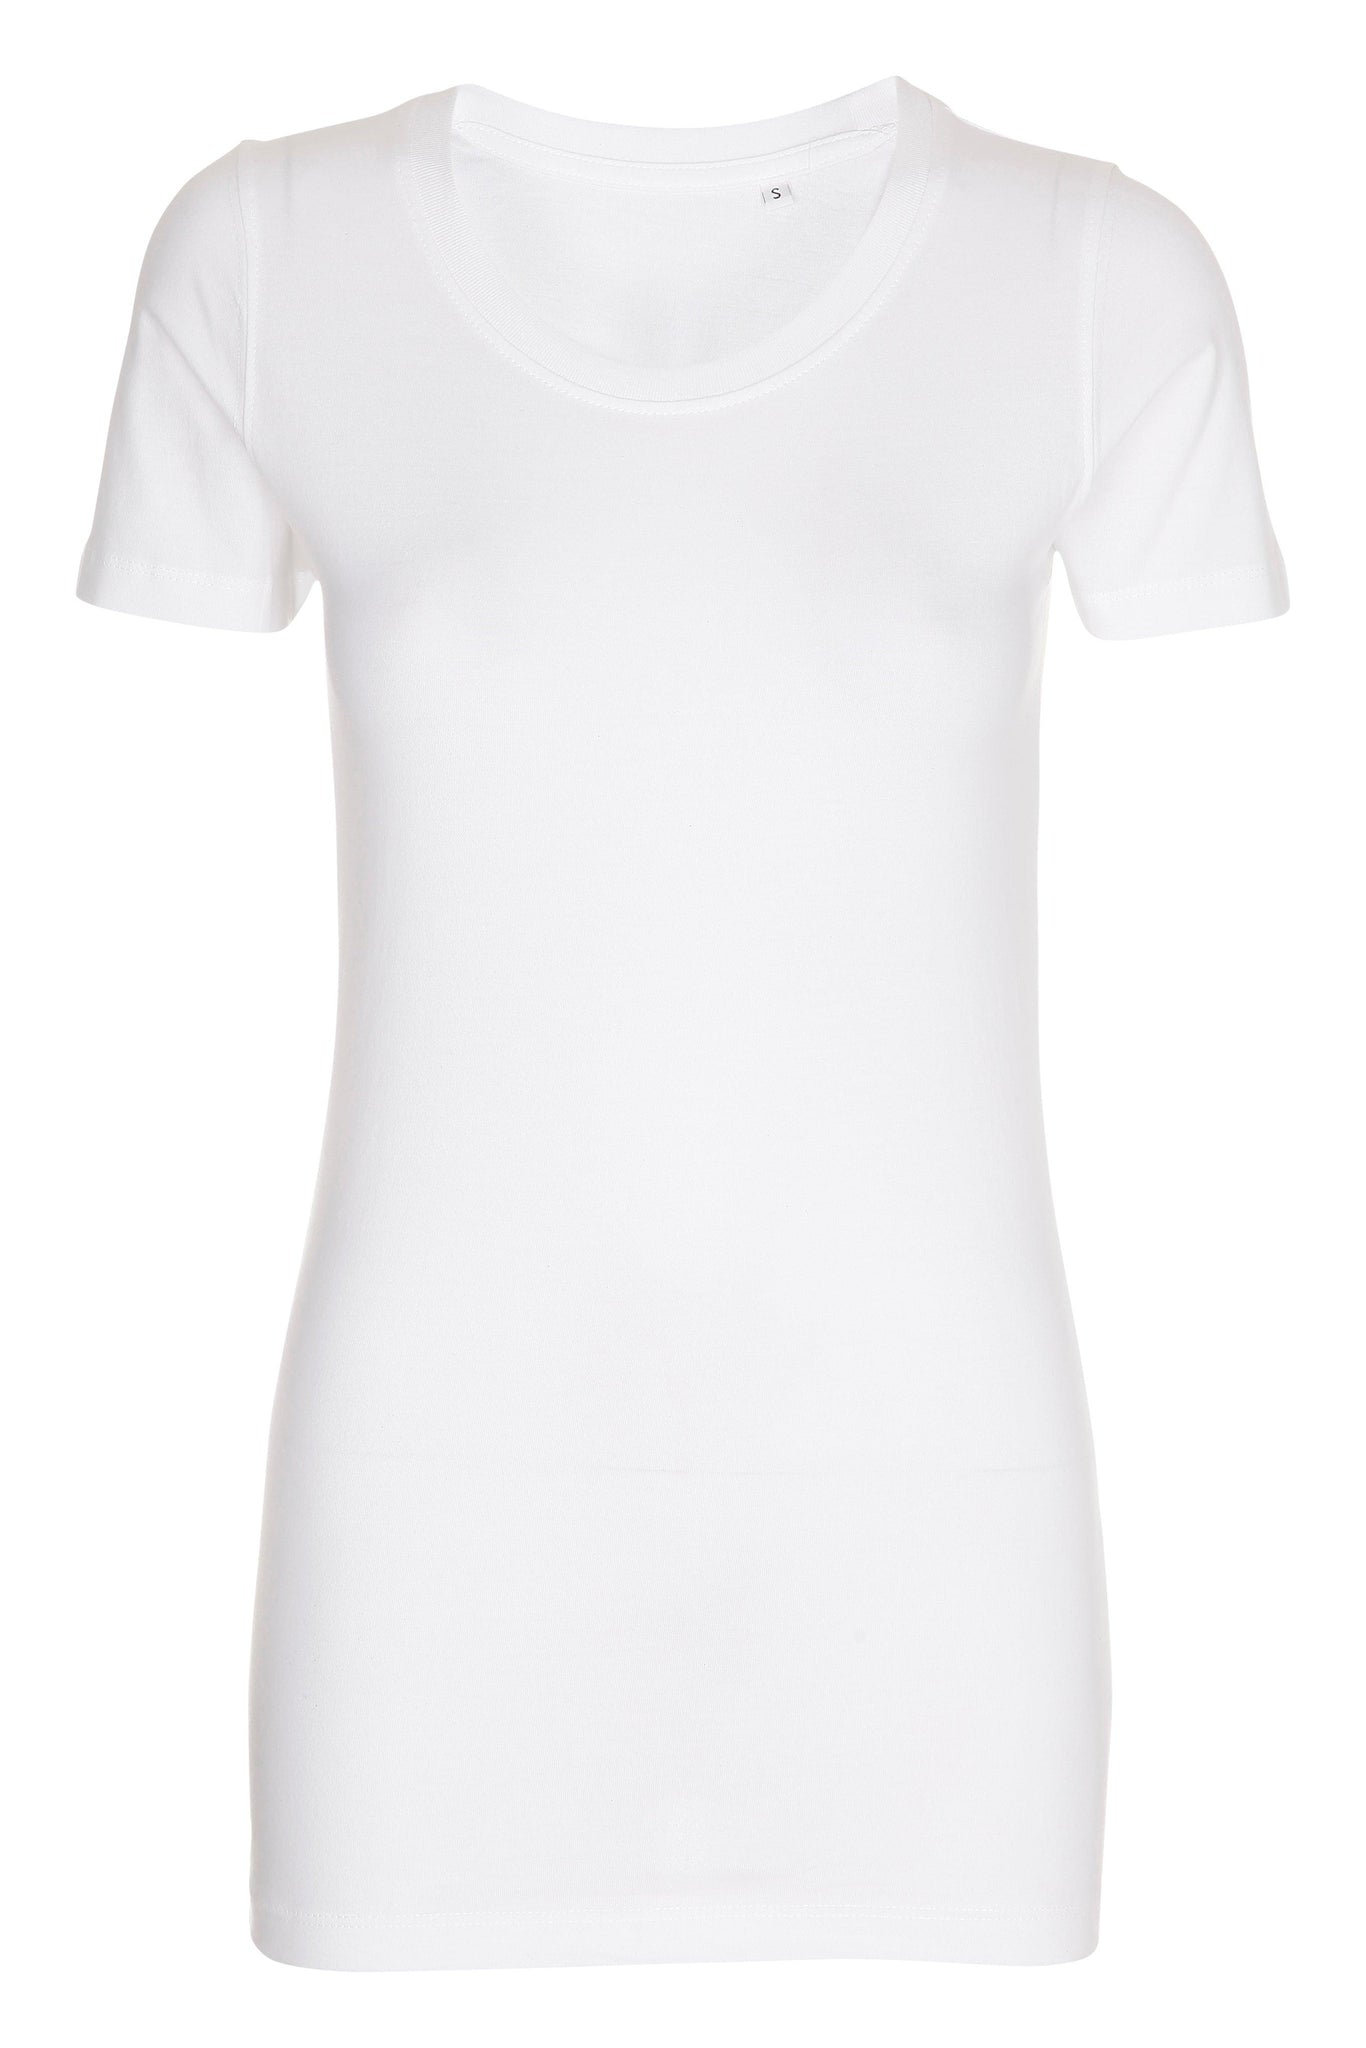 LabelFree Lady Fashion T-Shirt - T-Shirt - JA Profil 